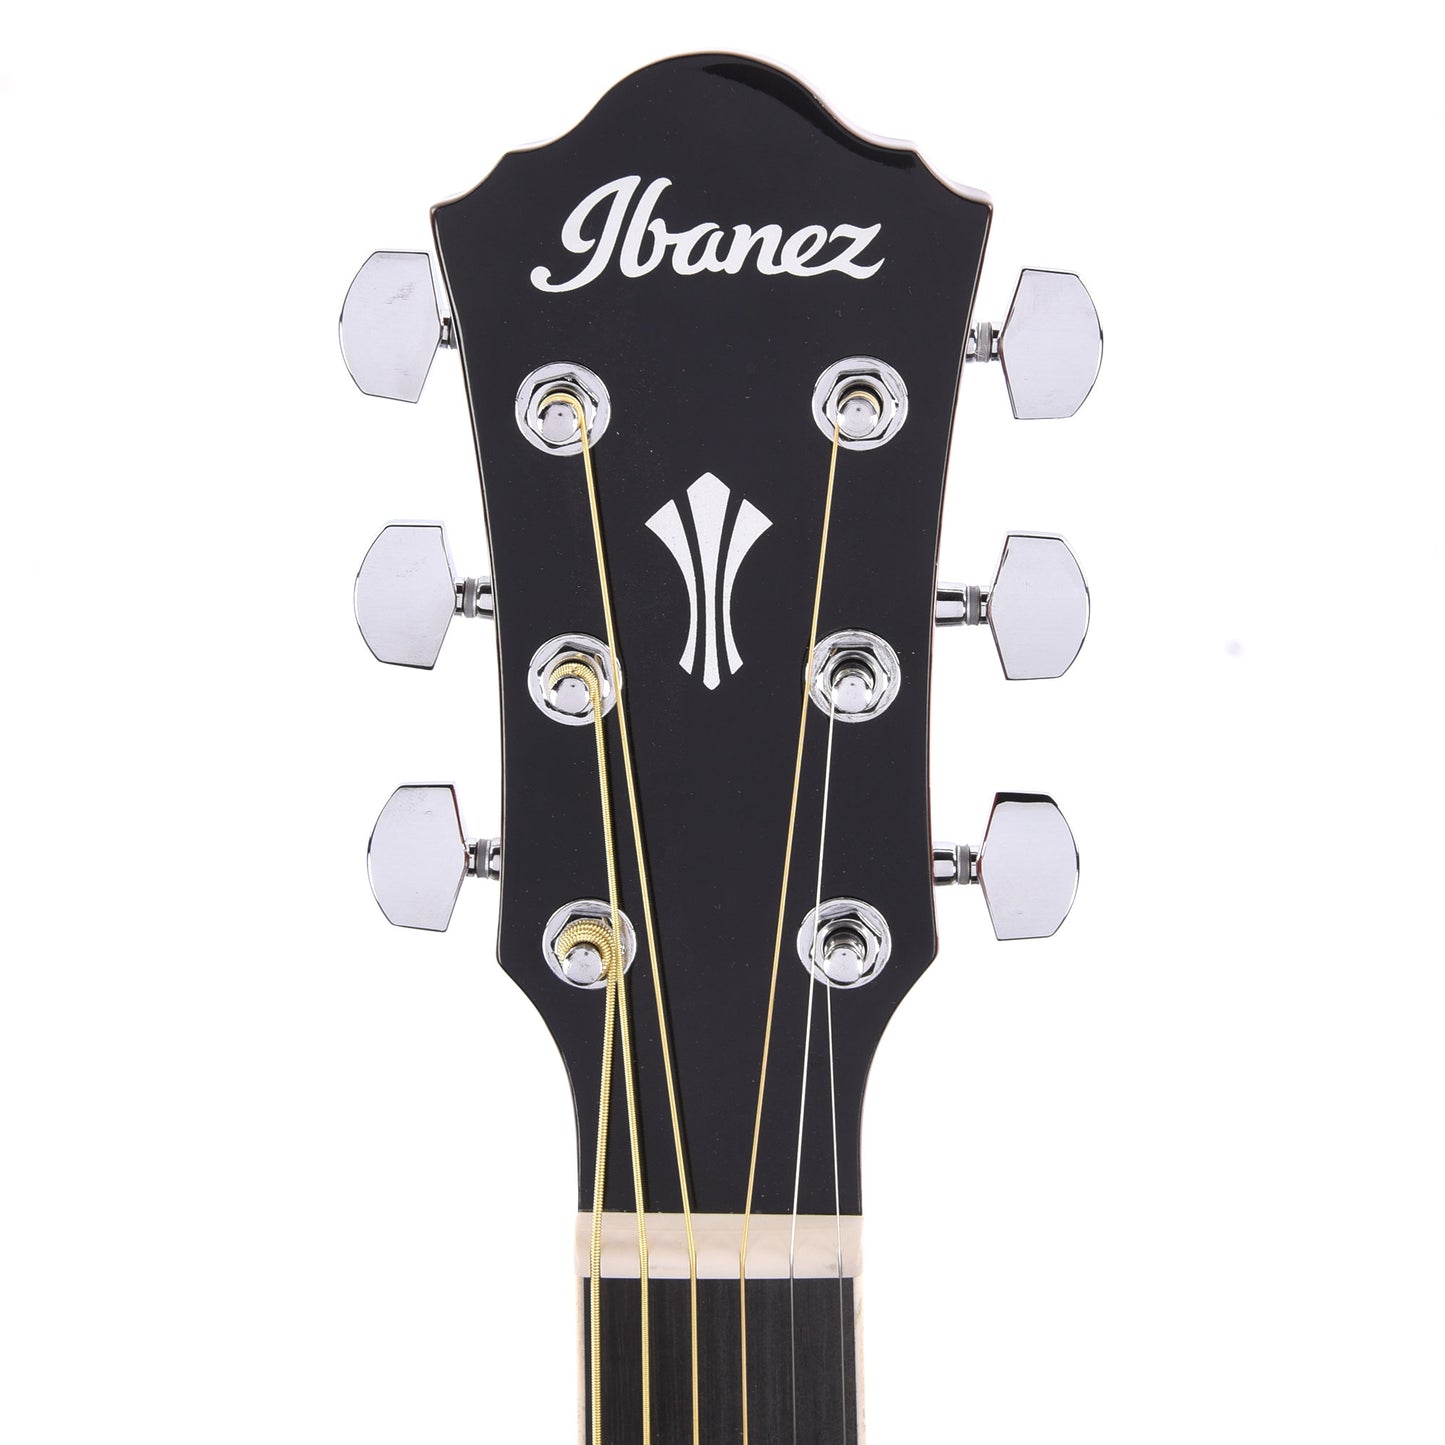 Ibanez AEG7MHVLS Acoustic-Electric Guitar Violin Sunburst High Gloss